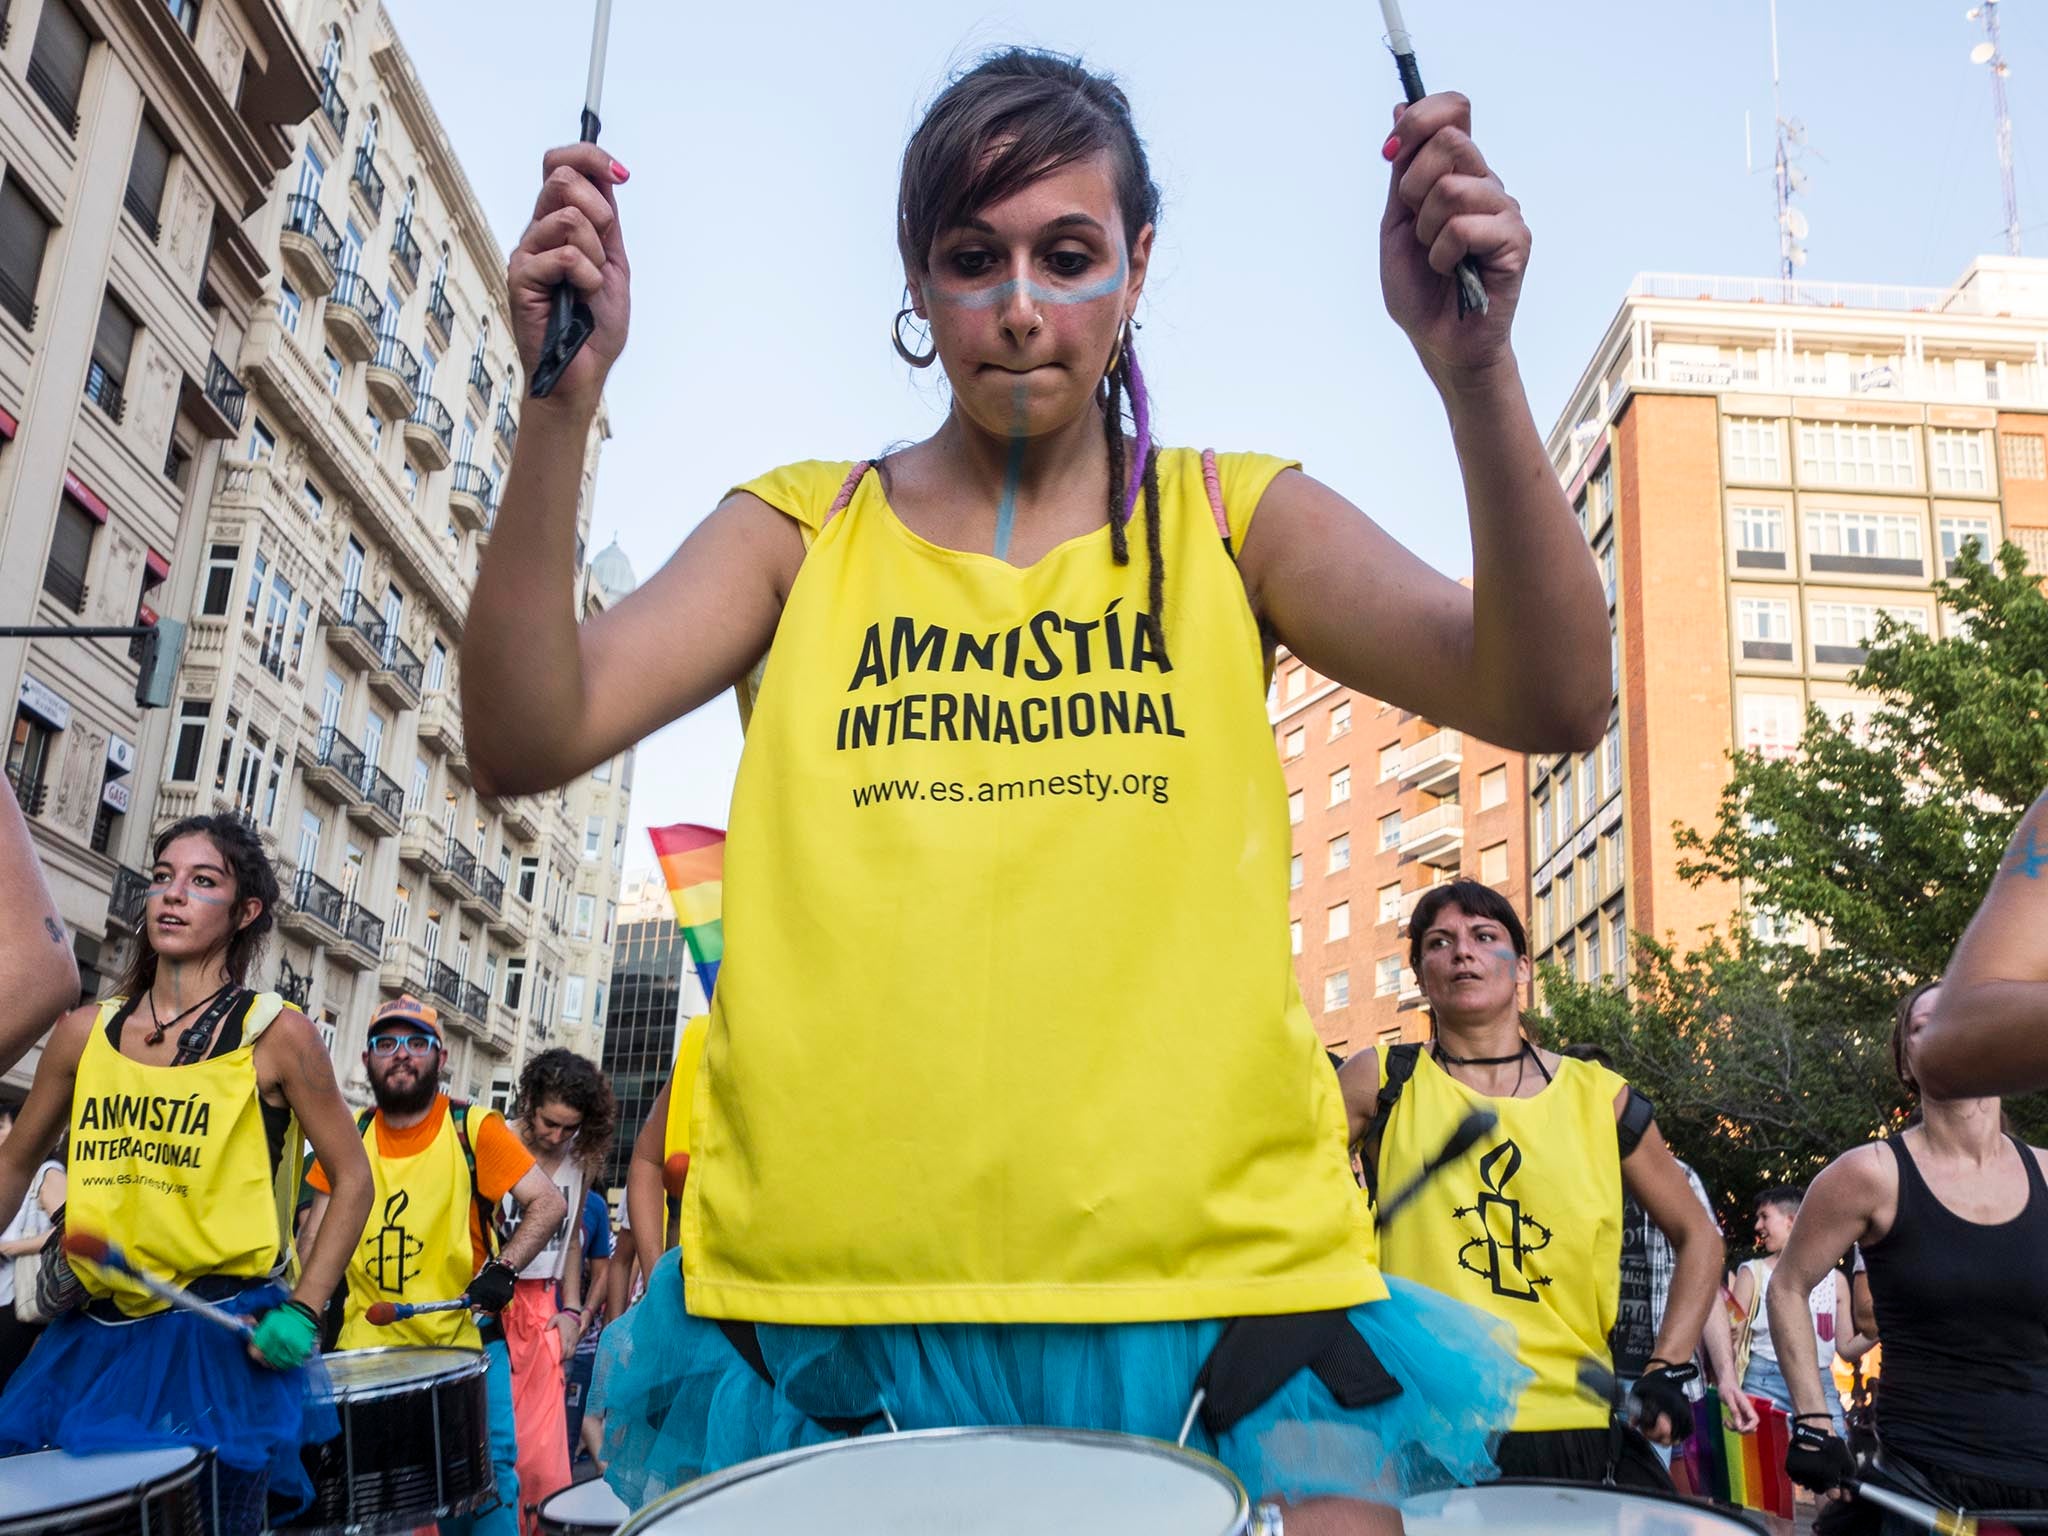 Members of Amnesty International celebrate Gay Pride in Valencia, Spain